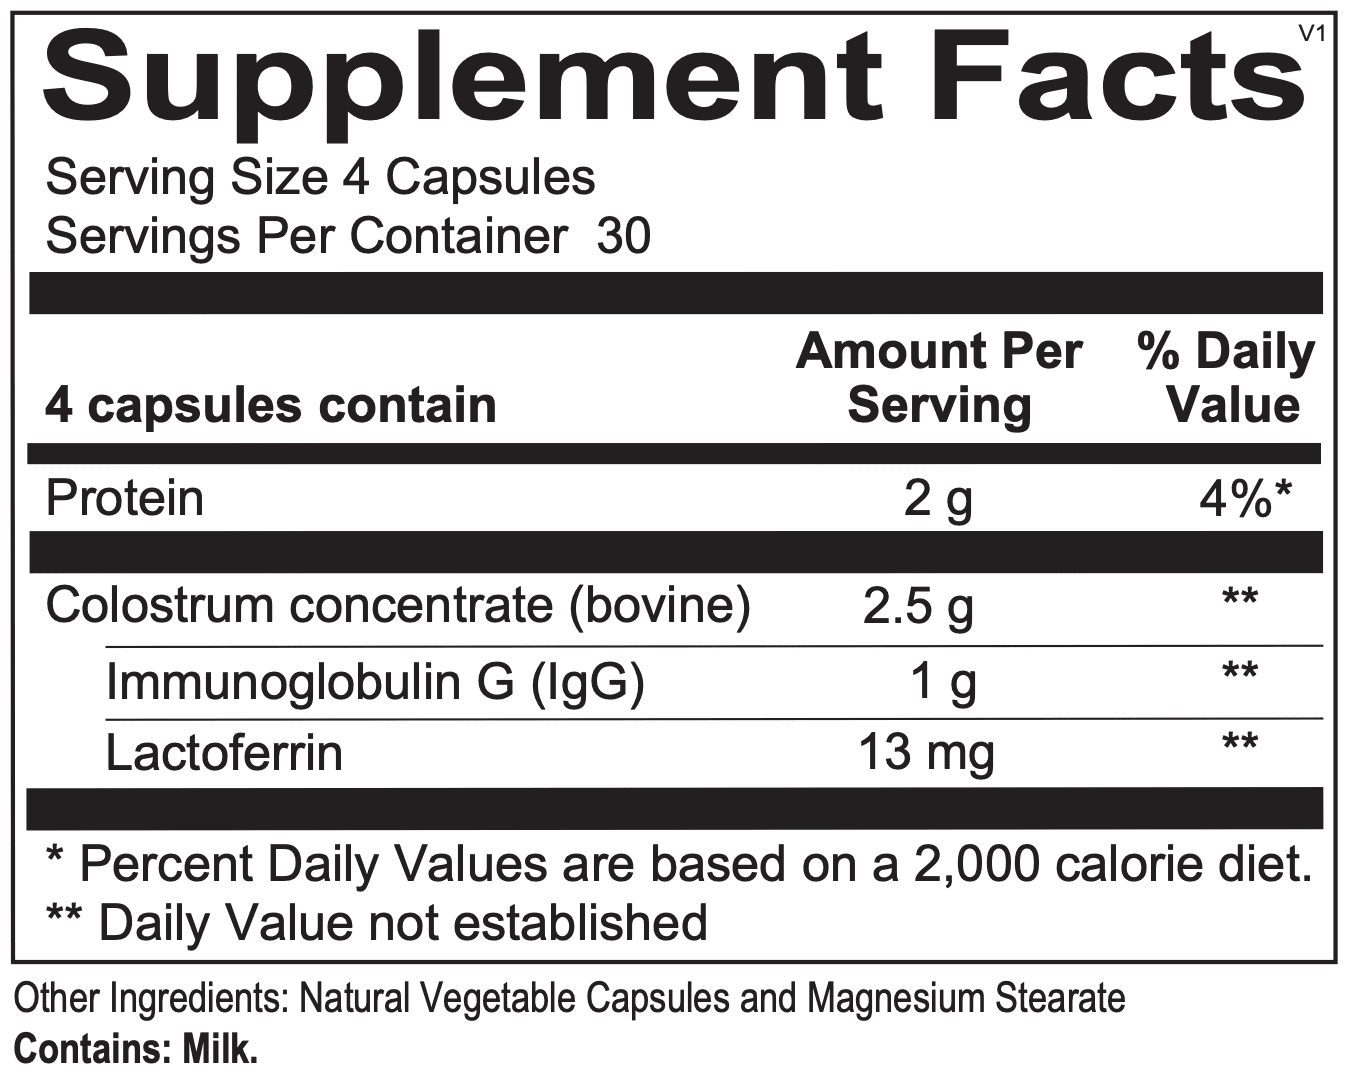 Serum IgG Capsules